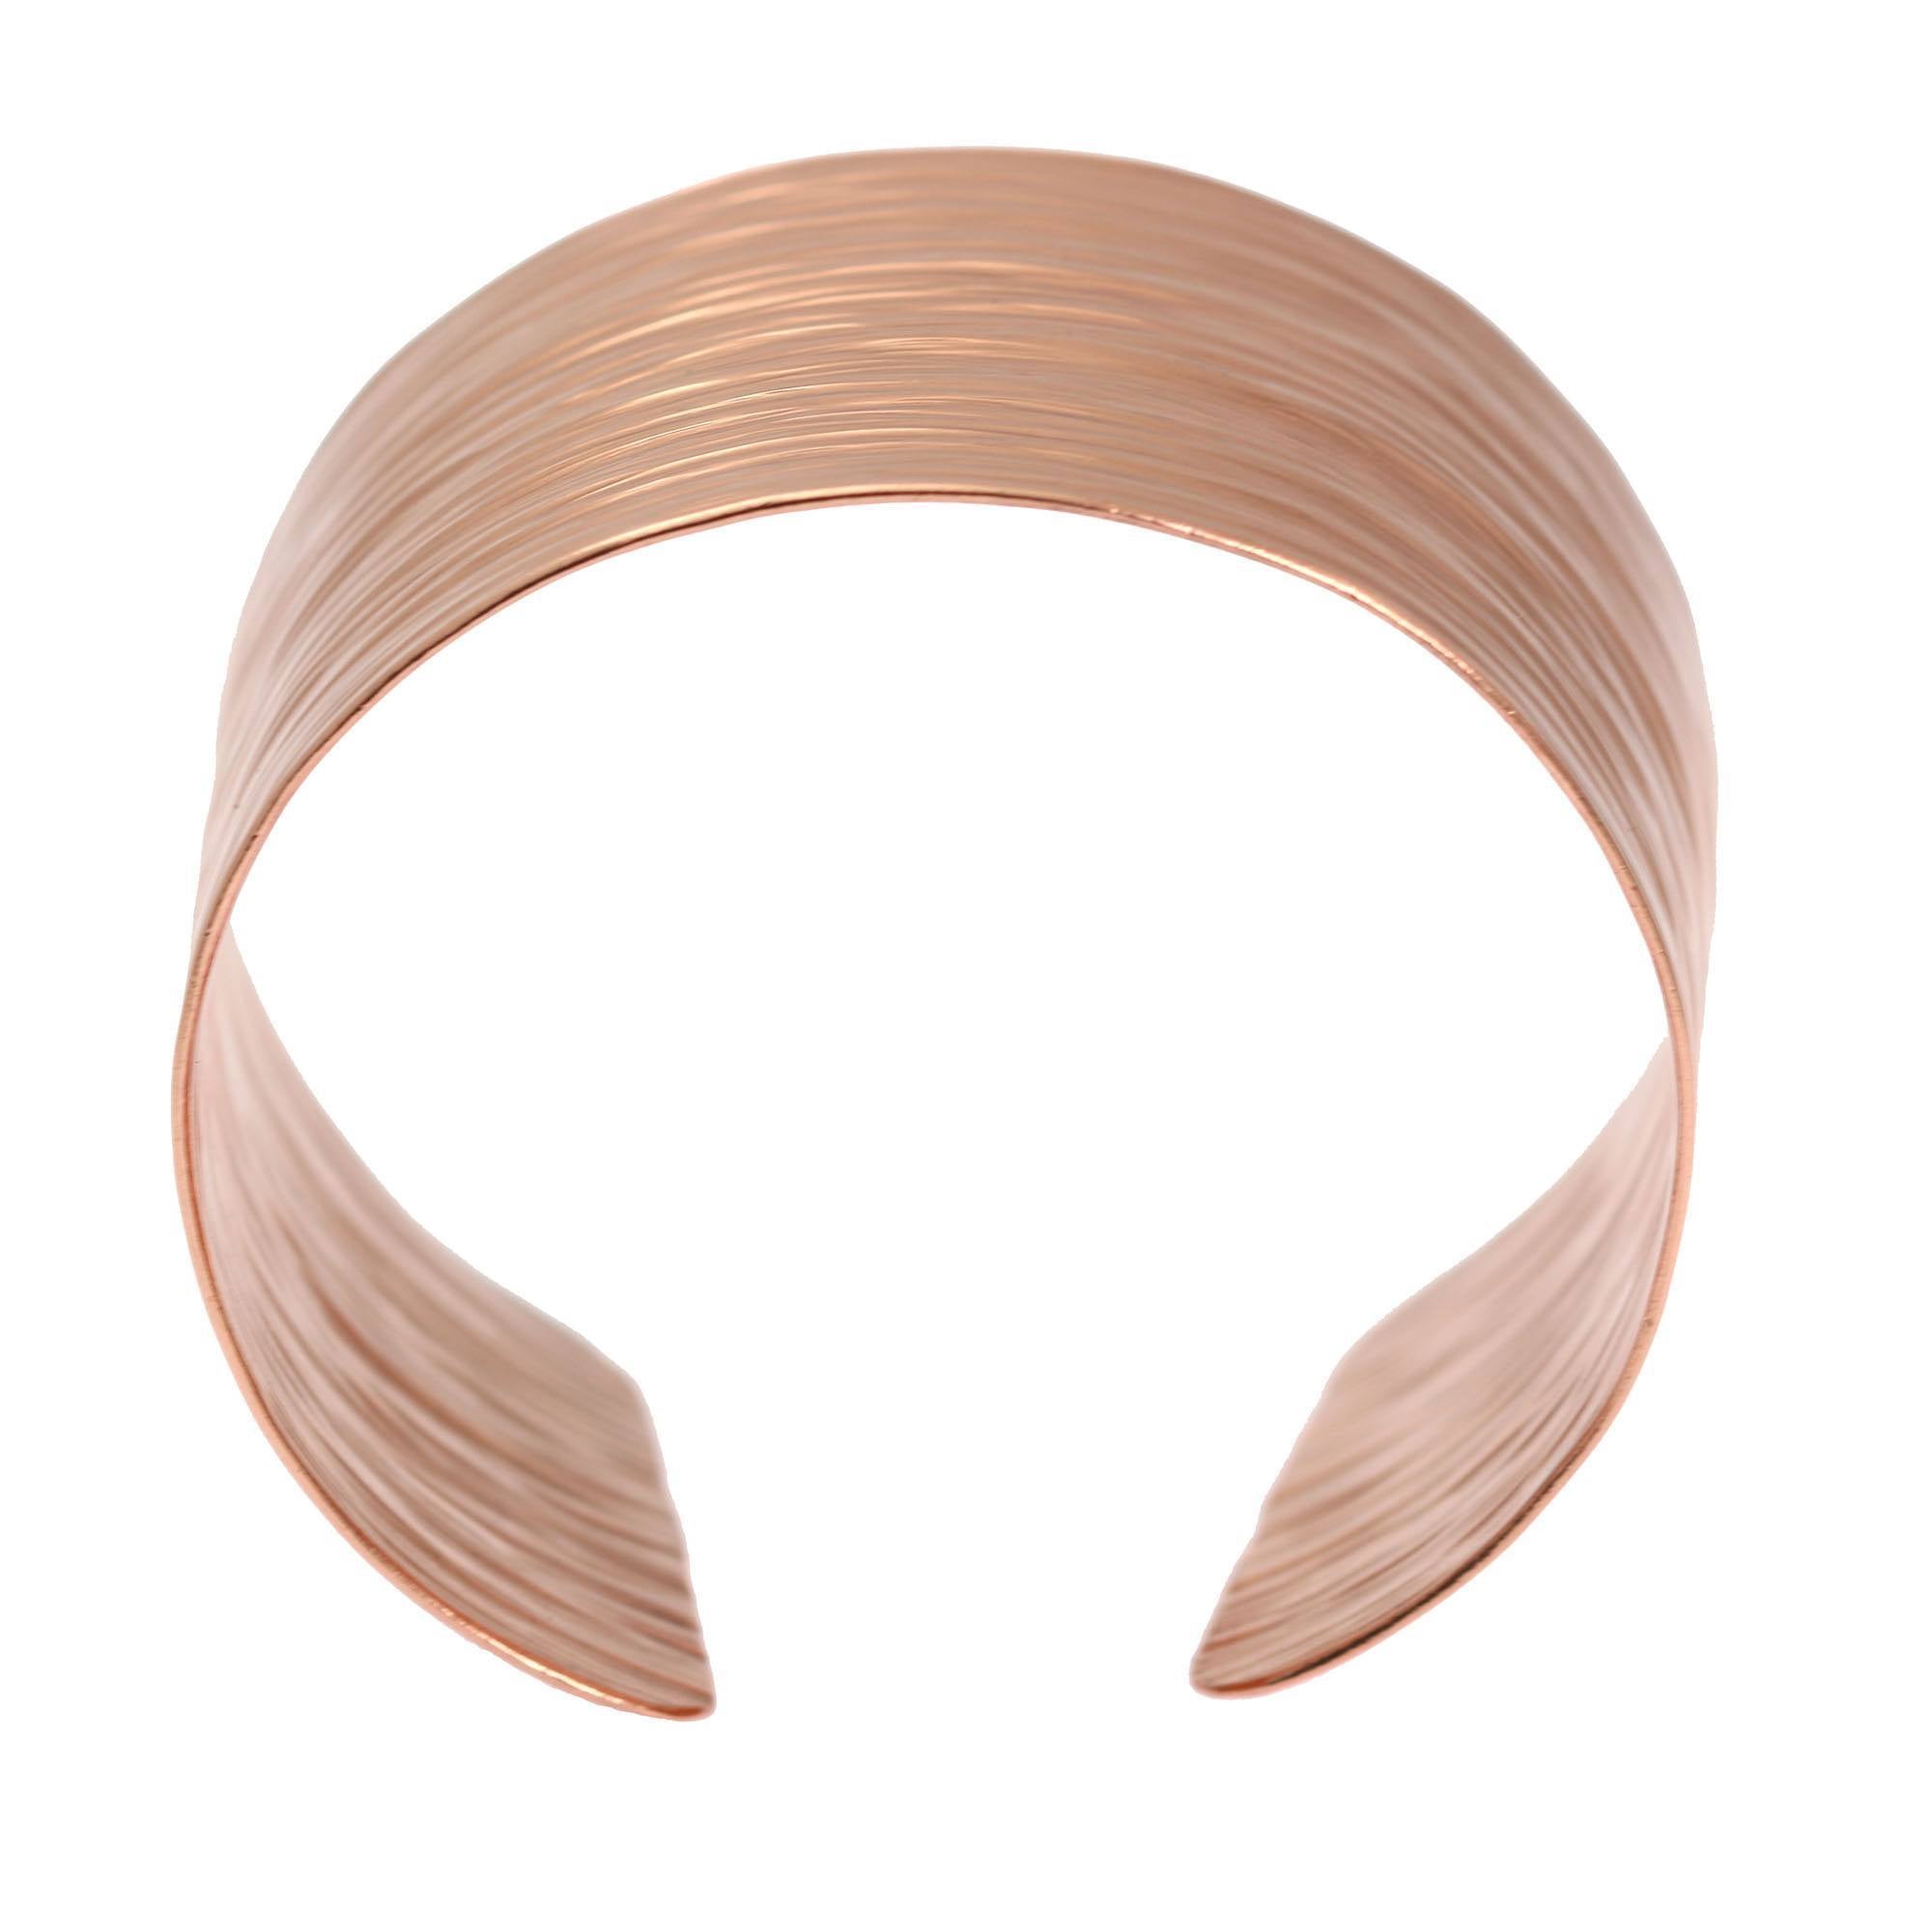 Shape of Chased Copper Bark Cuff Bracelet